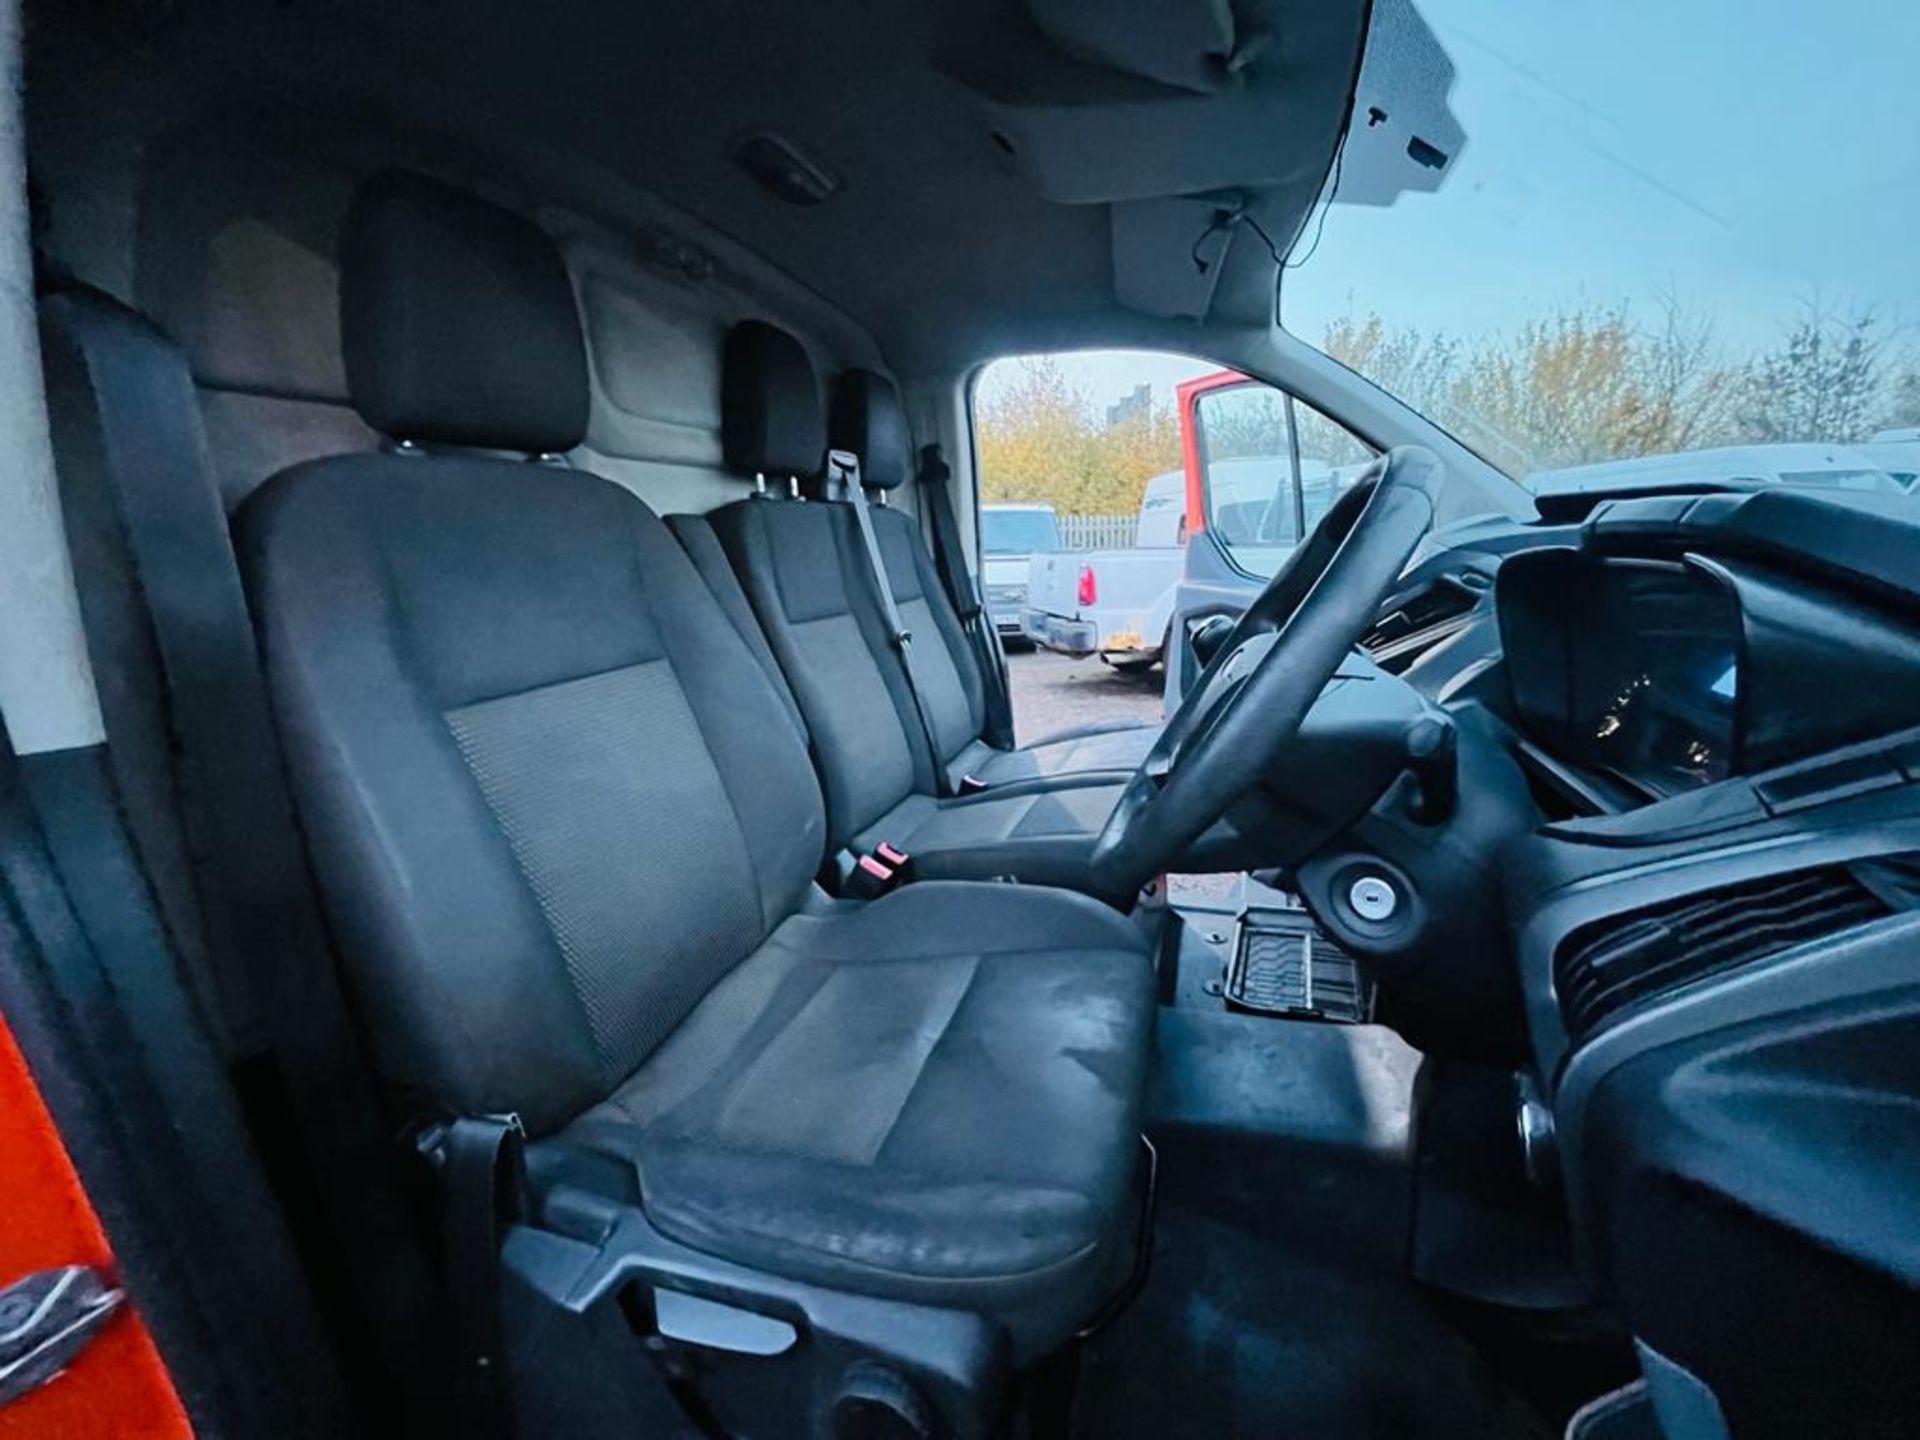 Ford Transit Custom 2.2 TDCI 100 290 LWB H3 2015 '65 Reg' Panel Van - Van Vault - Image 19 of 30